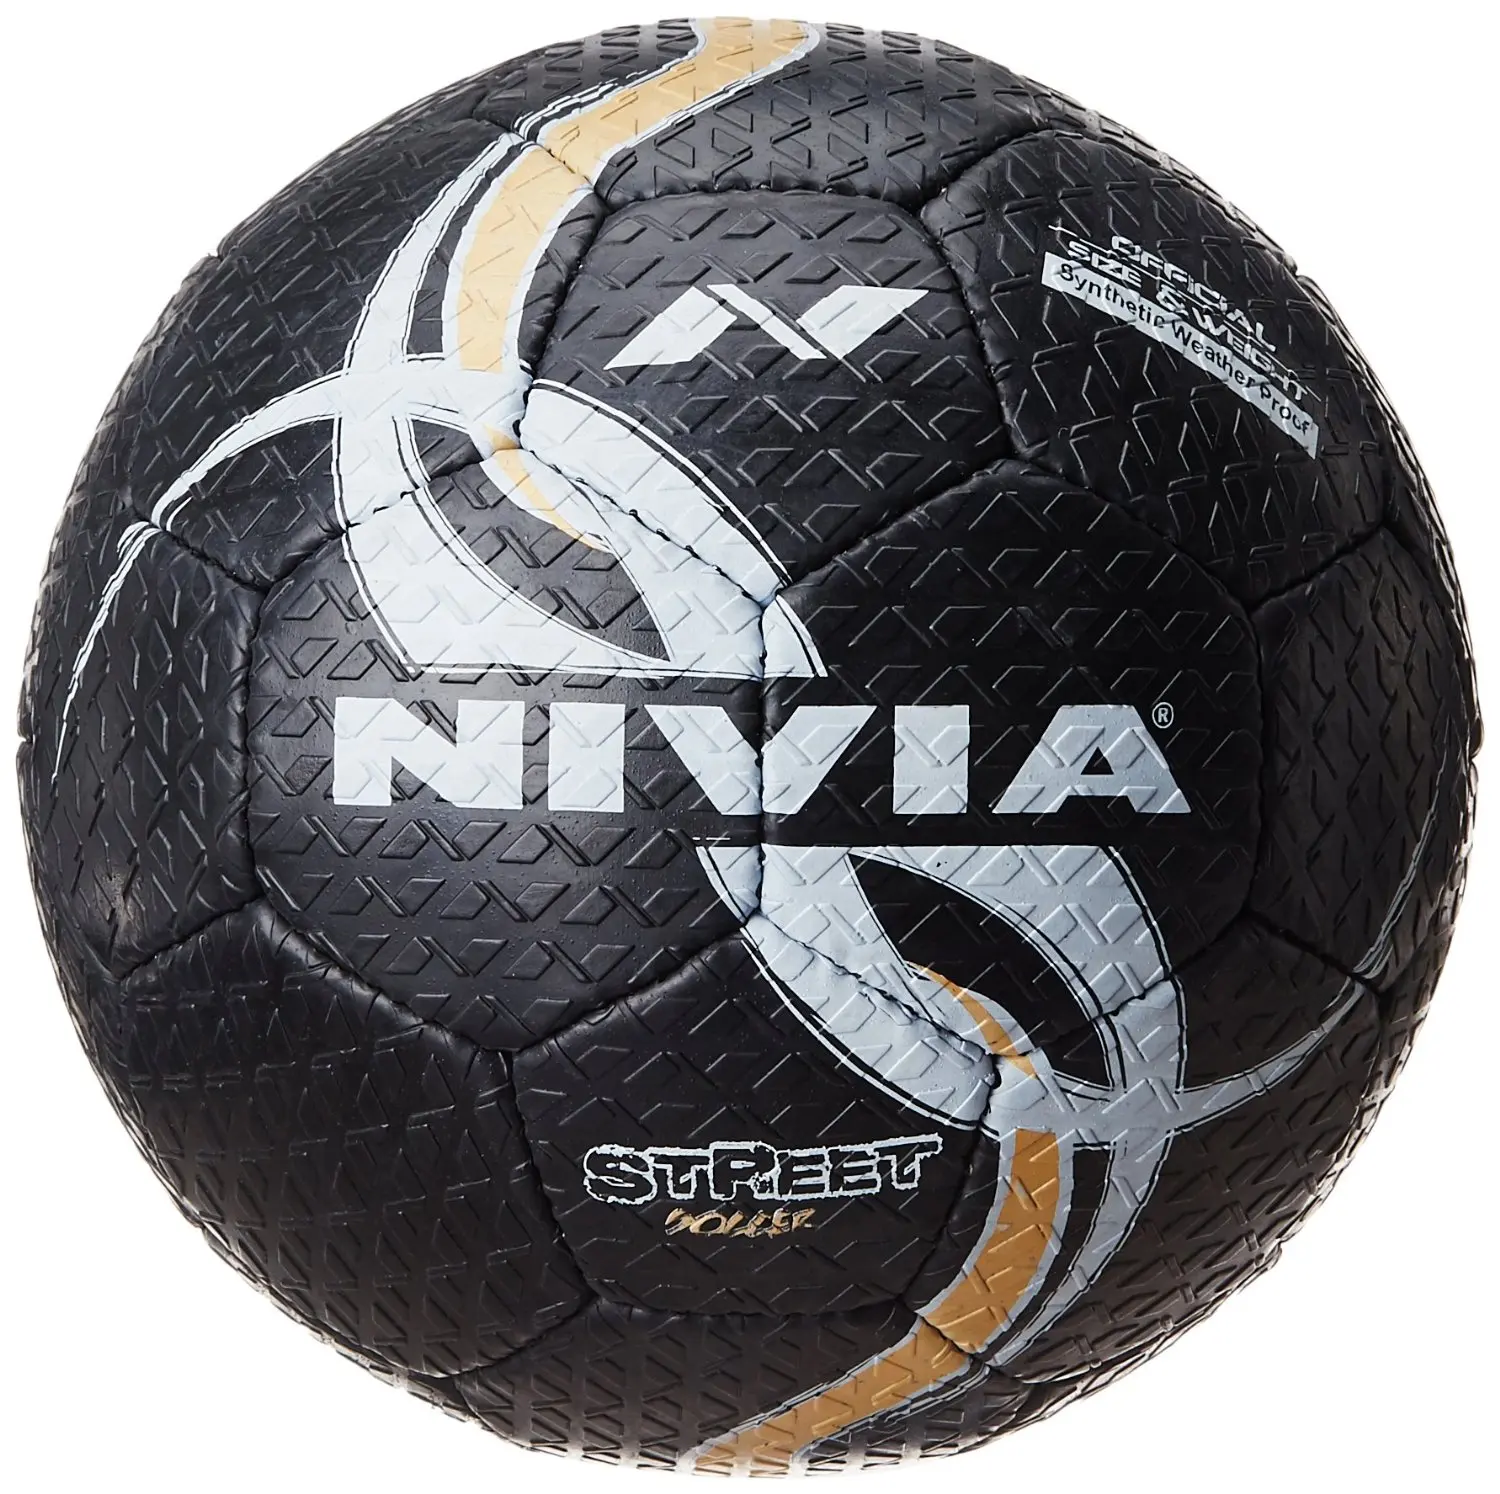 Buy Nivia Storm Football in Cheap Price 